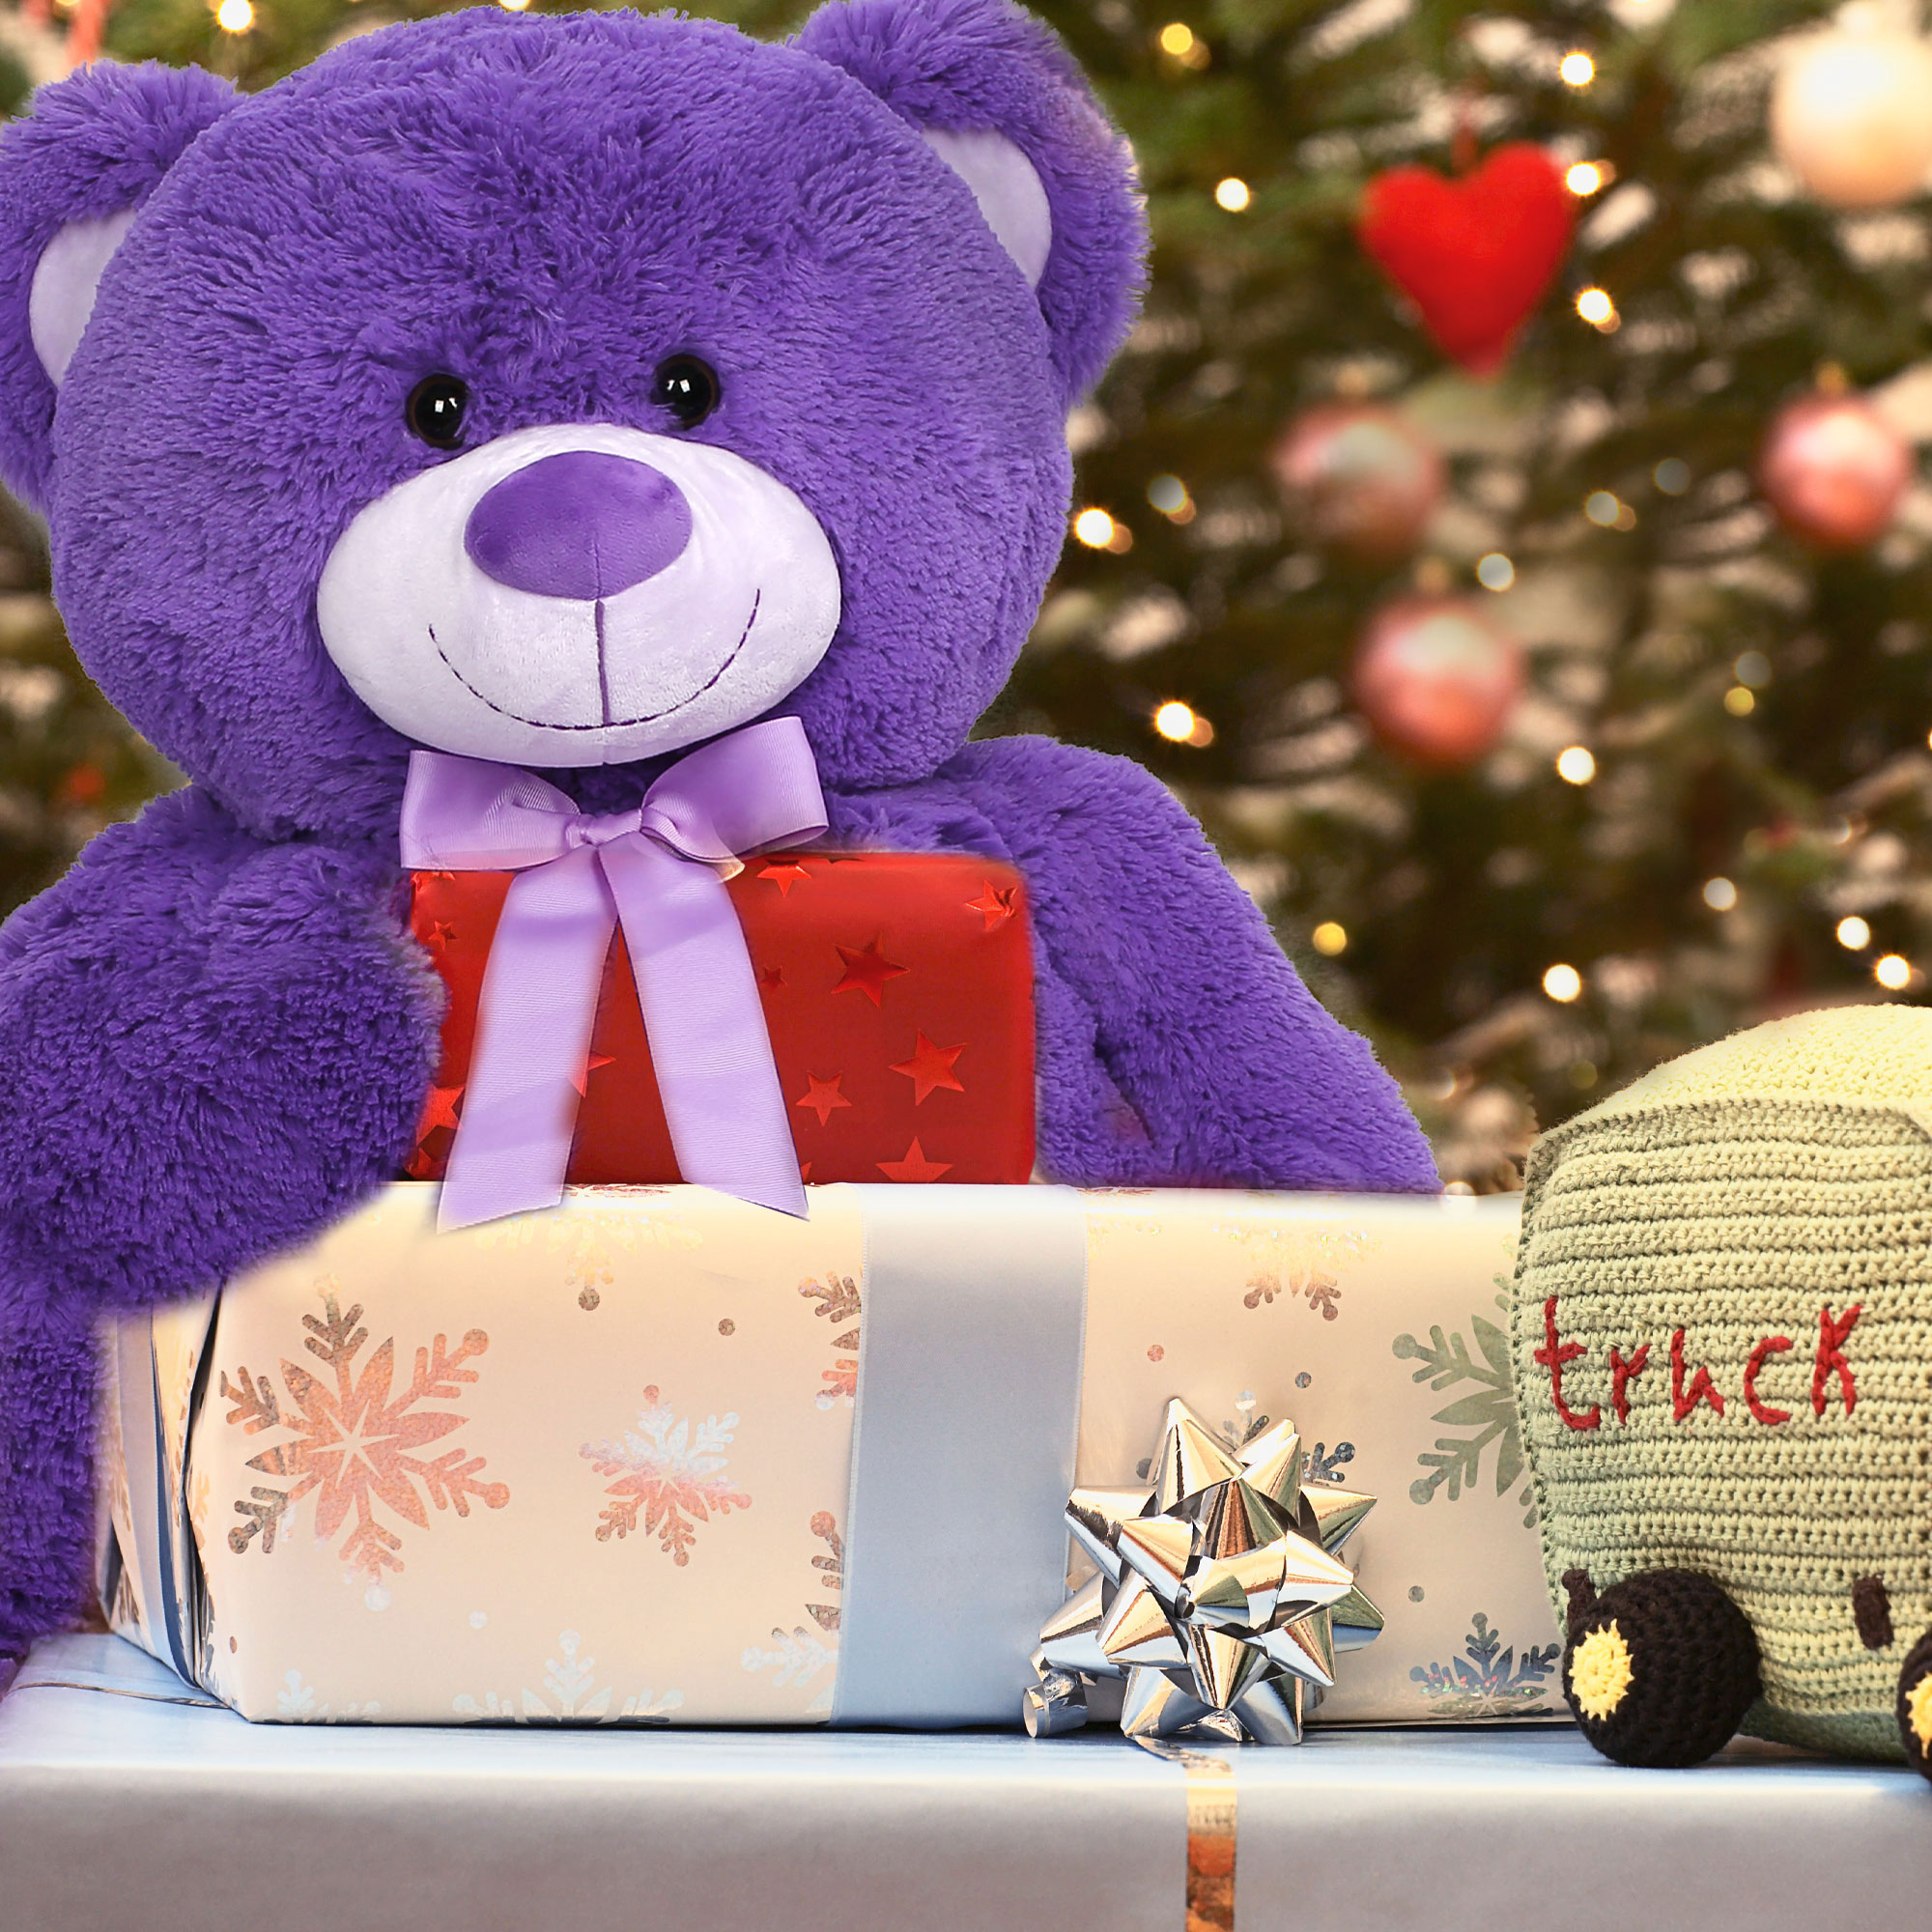 LotFancy 39" Giant Teddy Bear Stuffed Animal, Bear Plush Toy with Footprints for Kids Adult, Purple - image 3 of 9